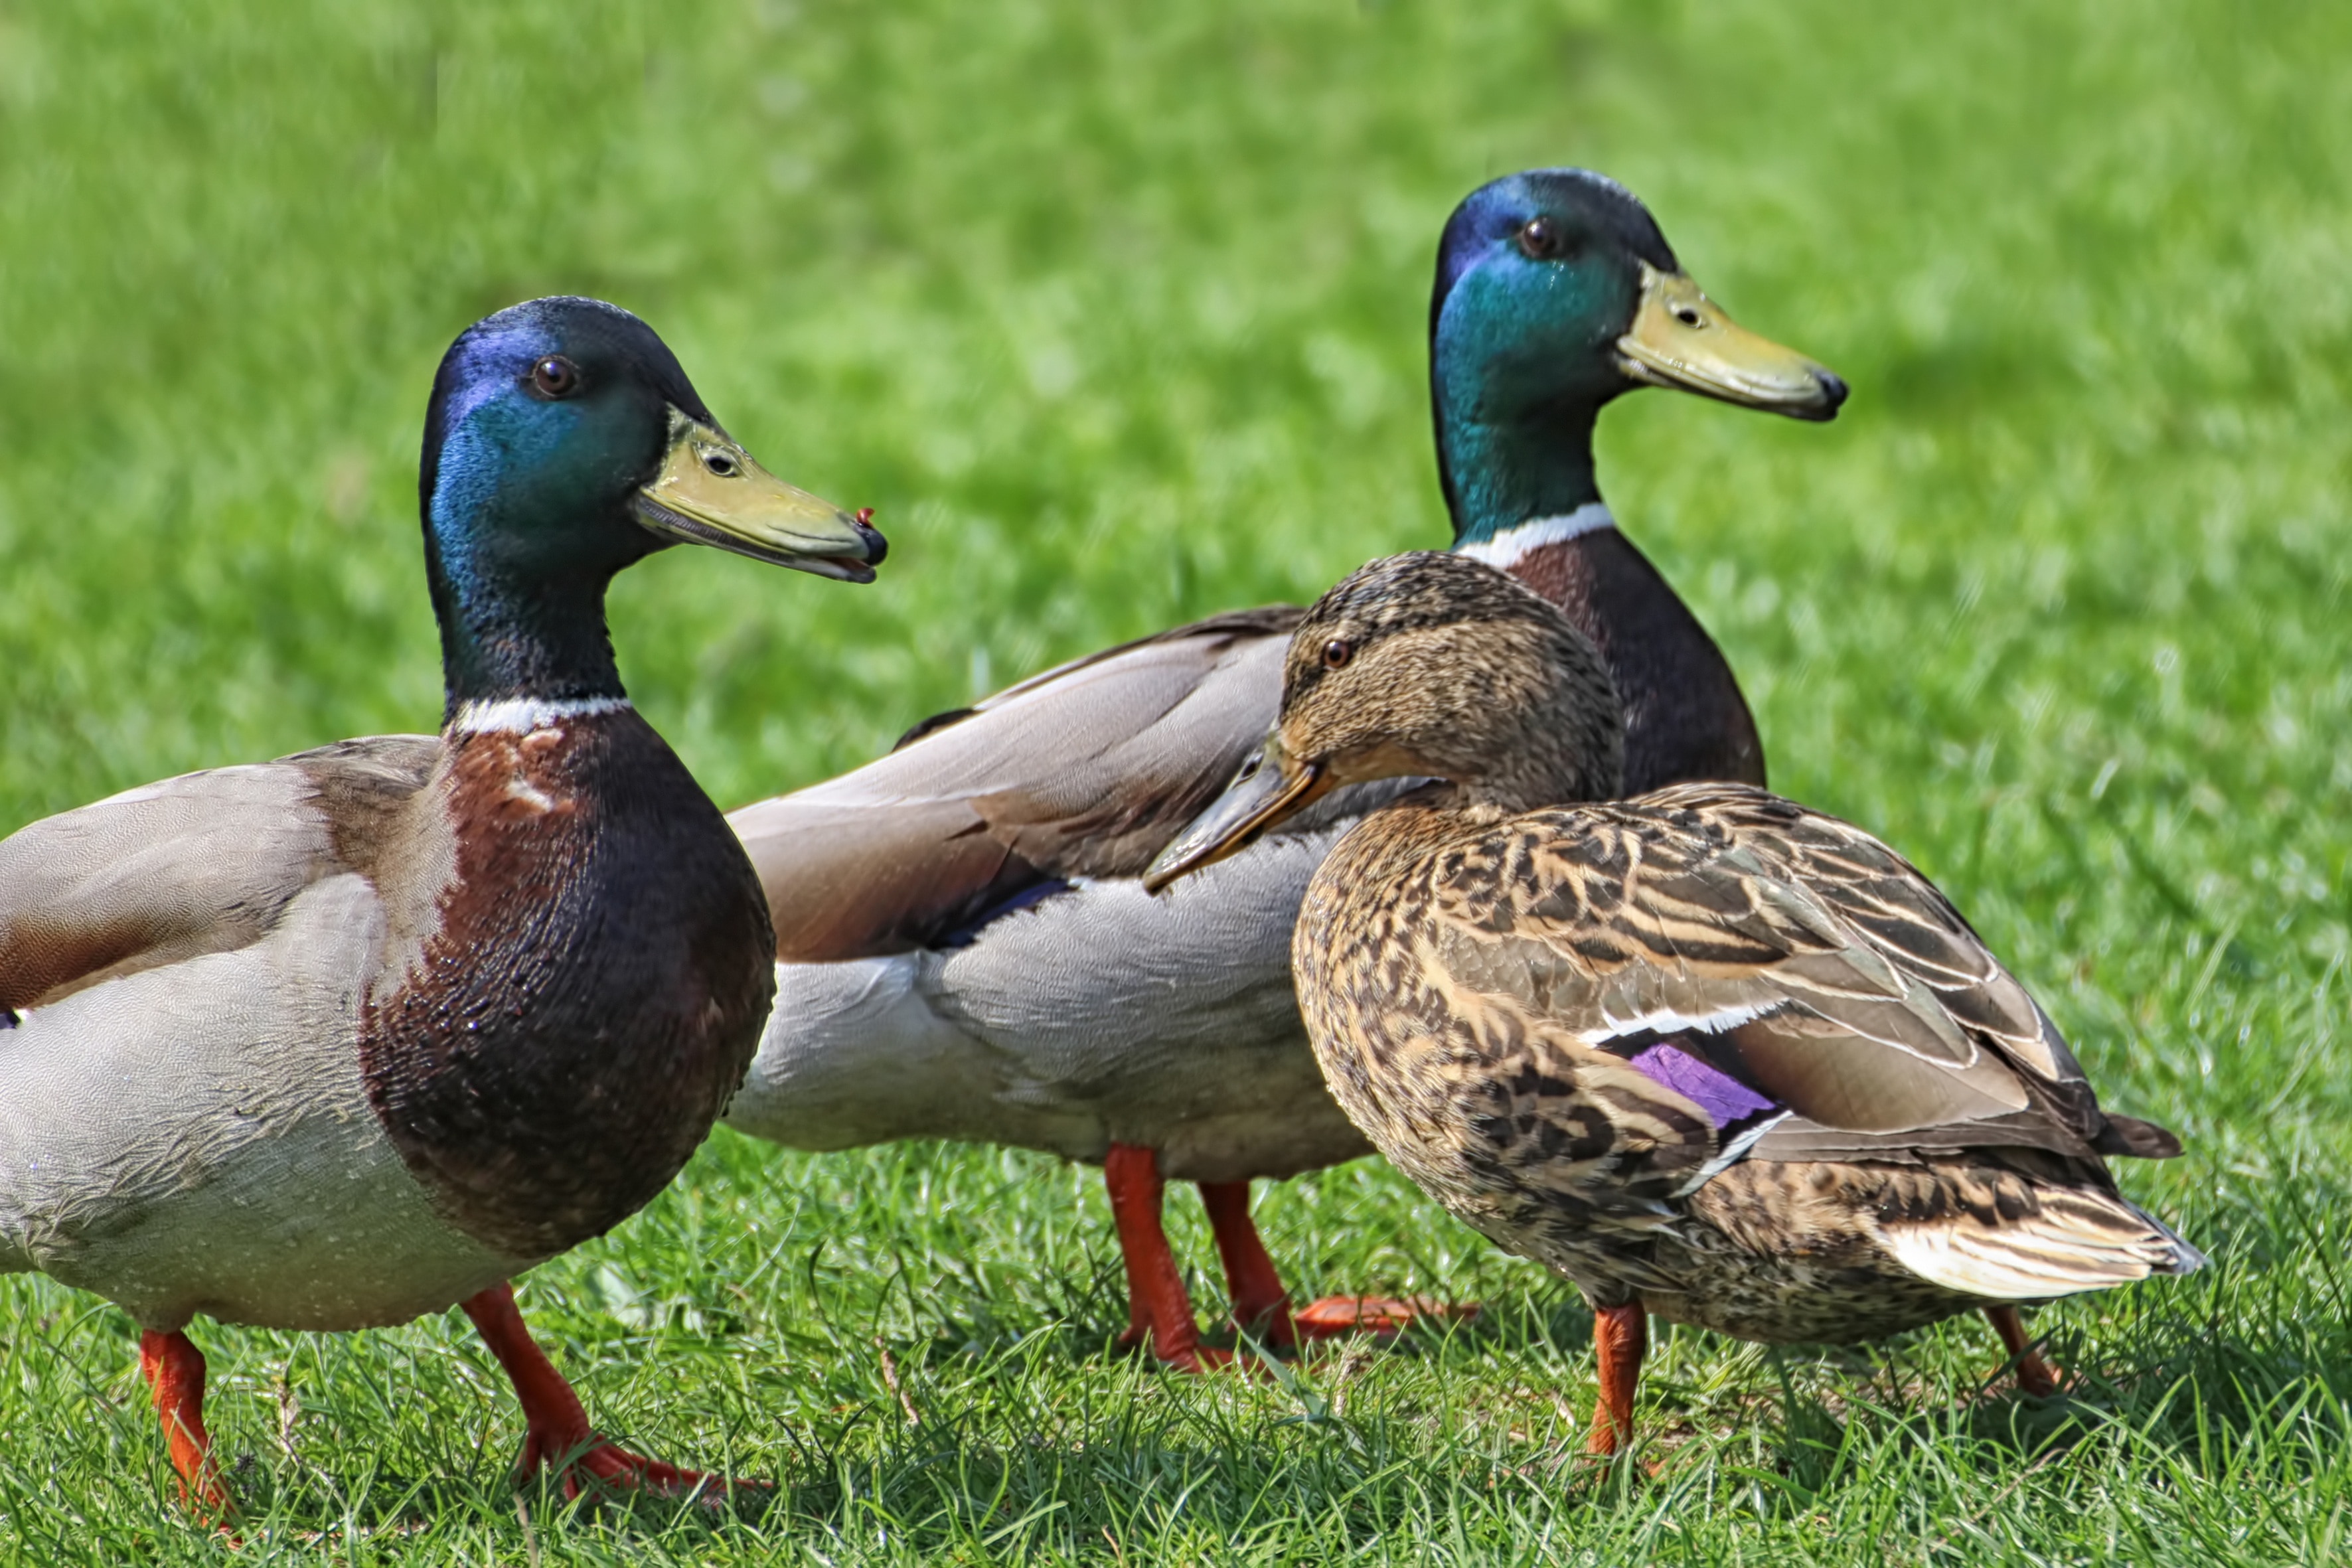 3 mallard ducks on green grass field during daytime